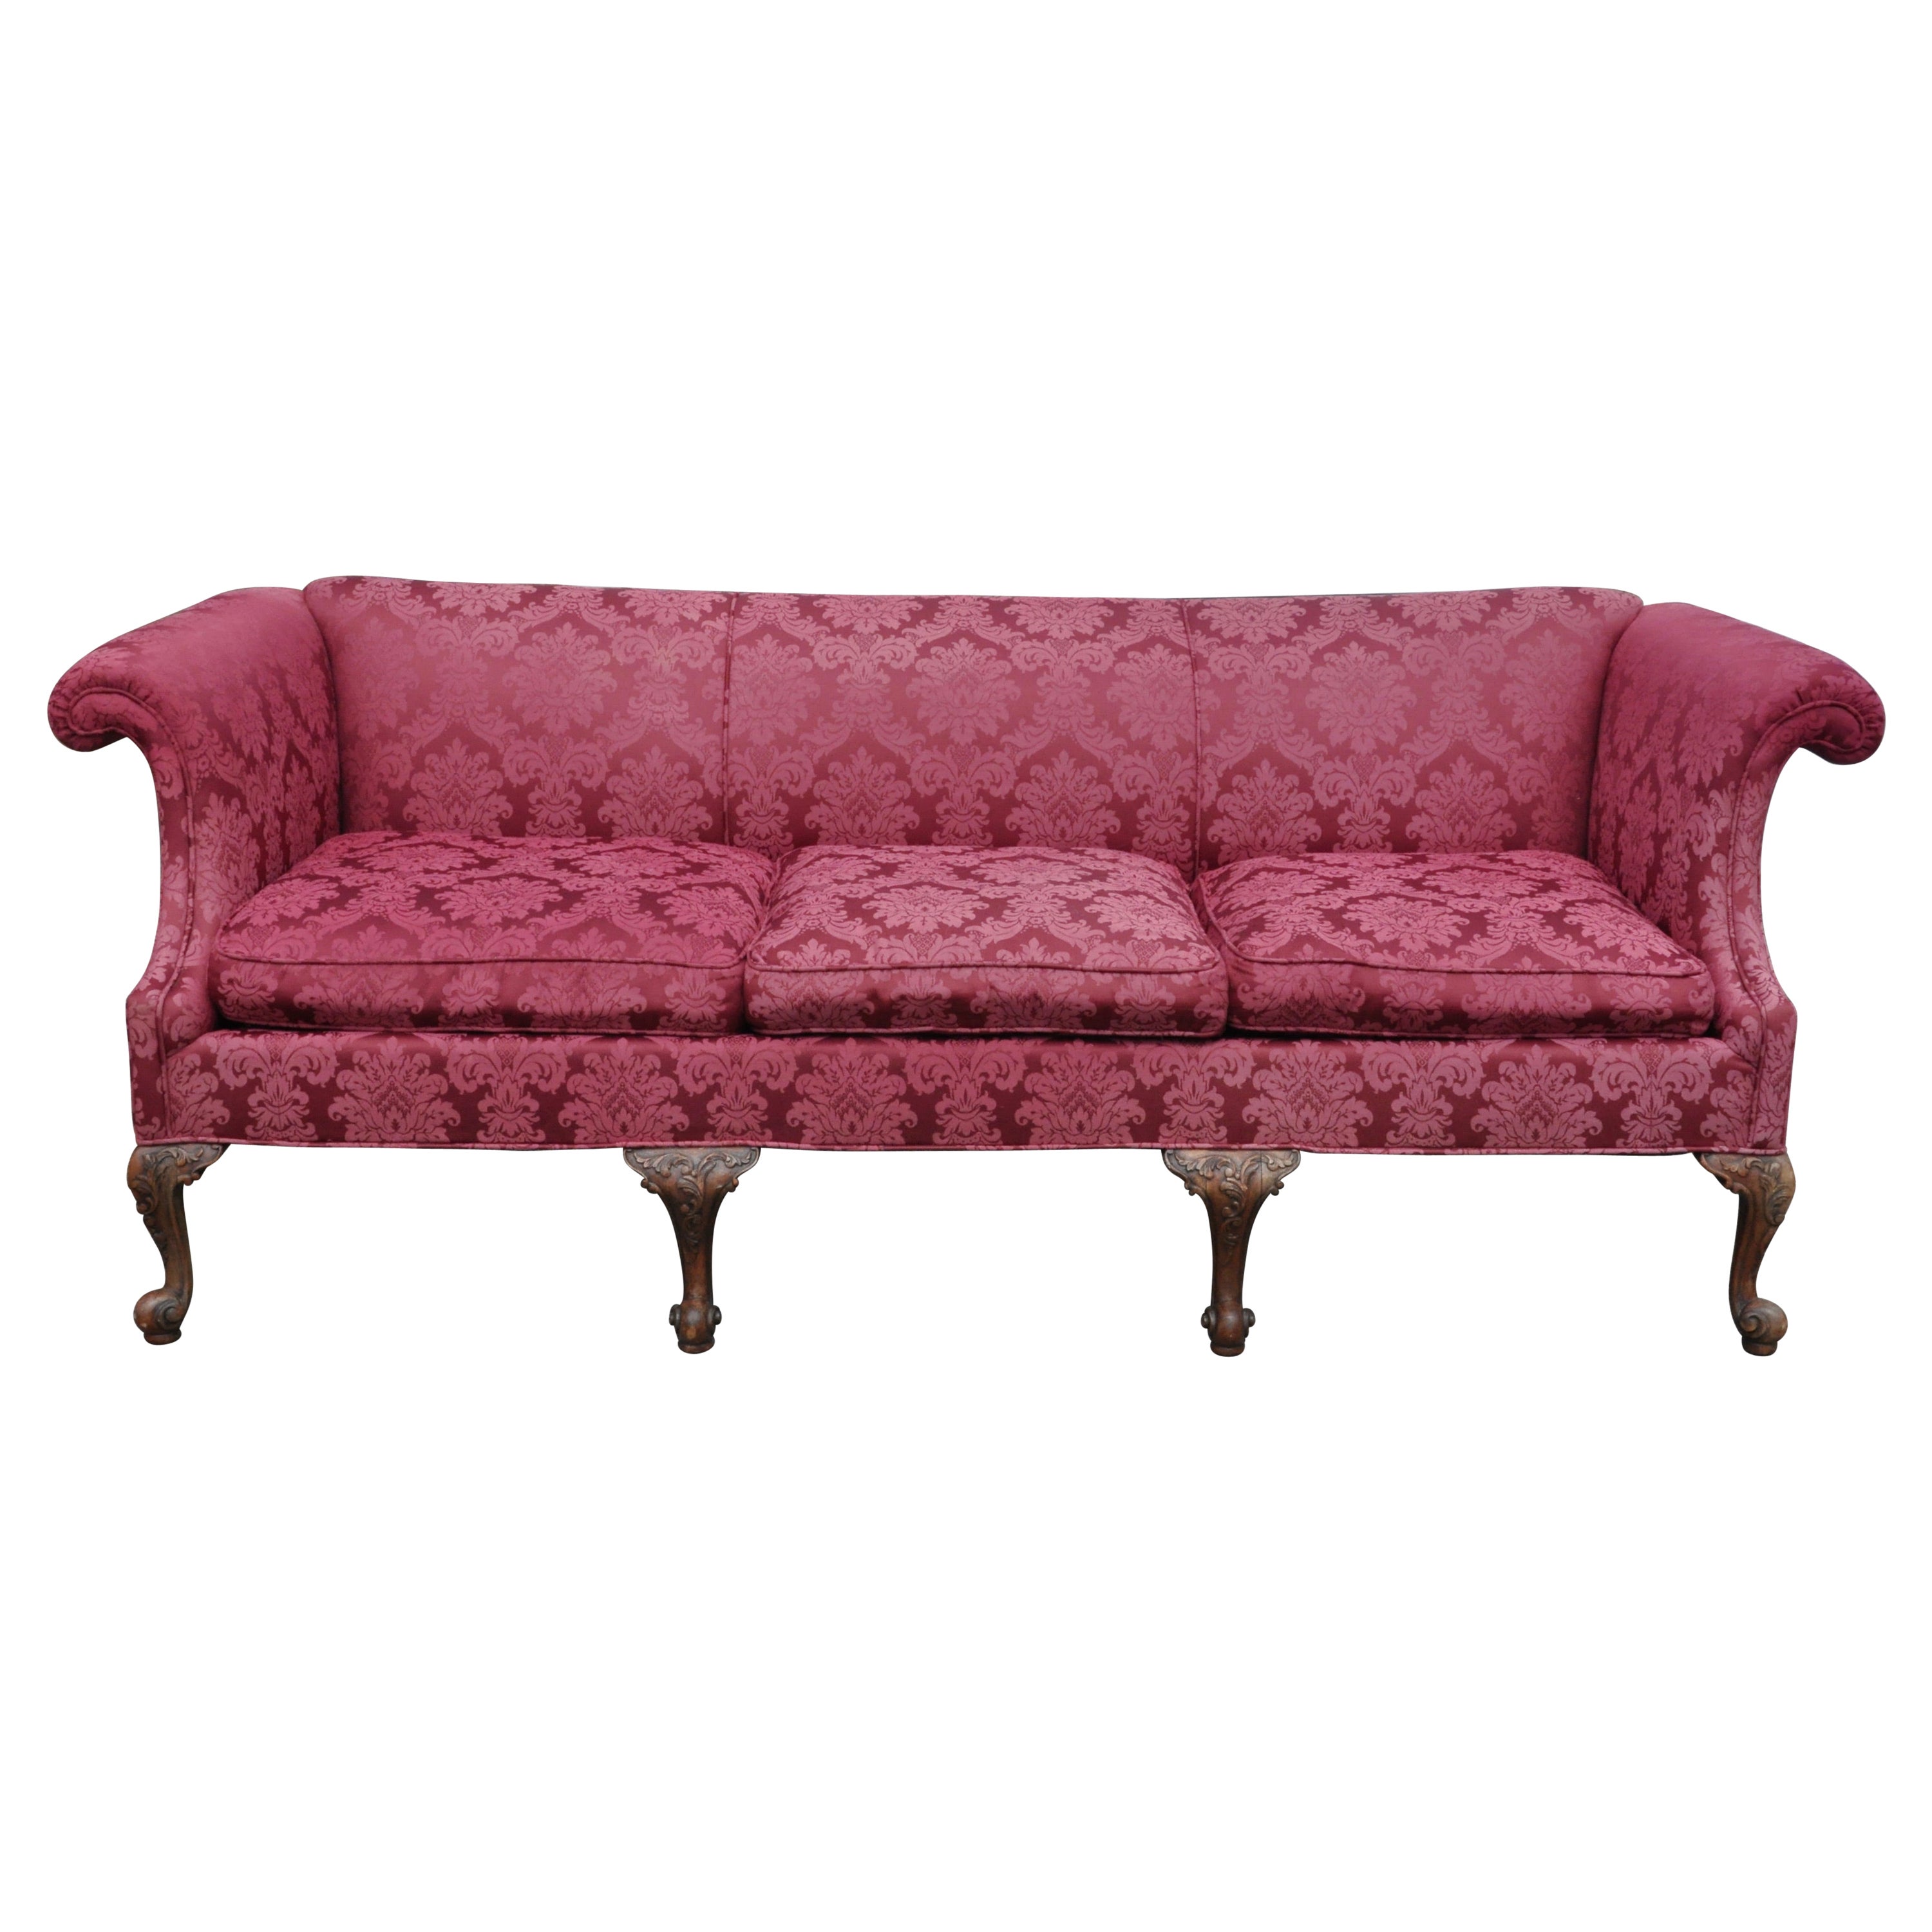 Early 20th Century Irish Style Georgian Sofa For Sale